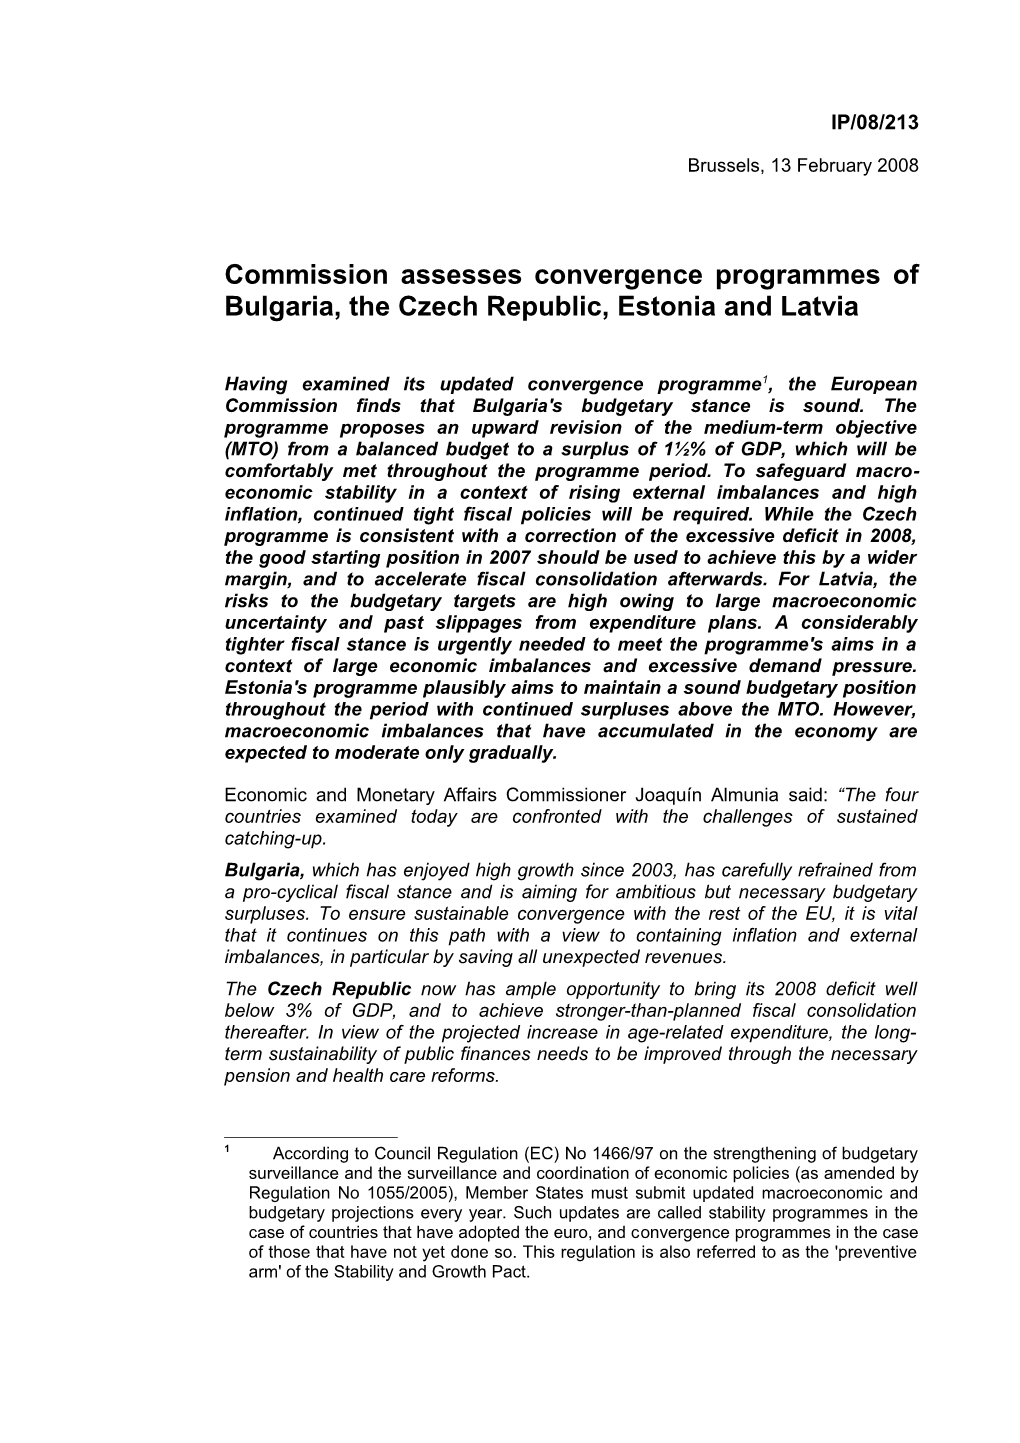 Commission Assesses Convergence Programmes of Bulgaria, the Czechrepublic, Estonia and Latvia